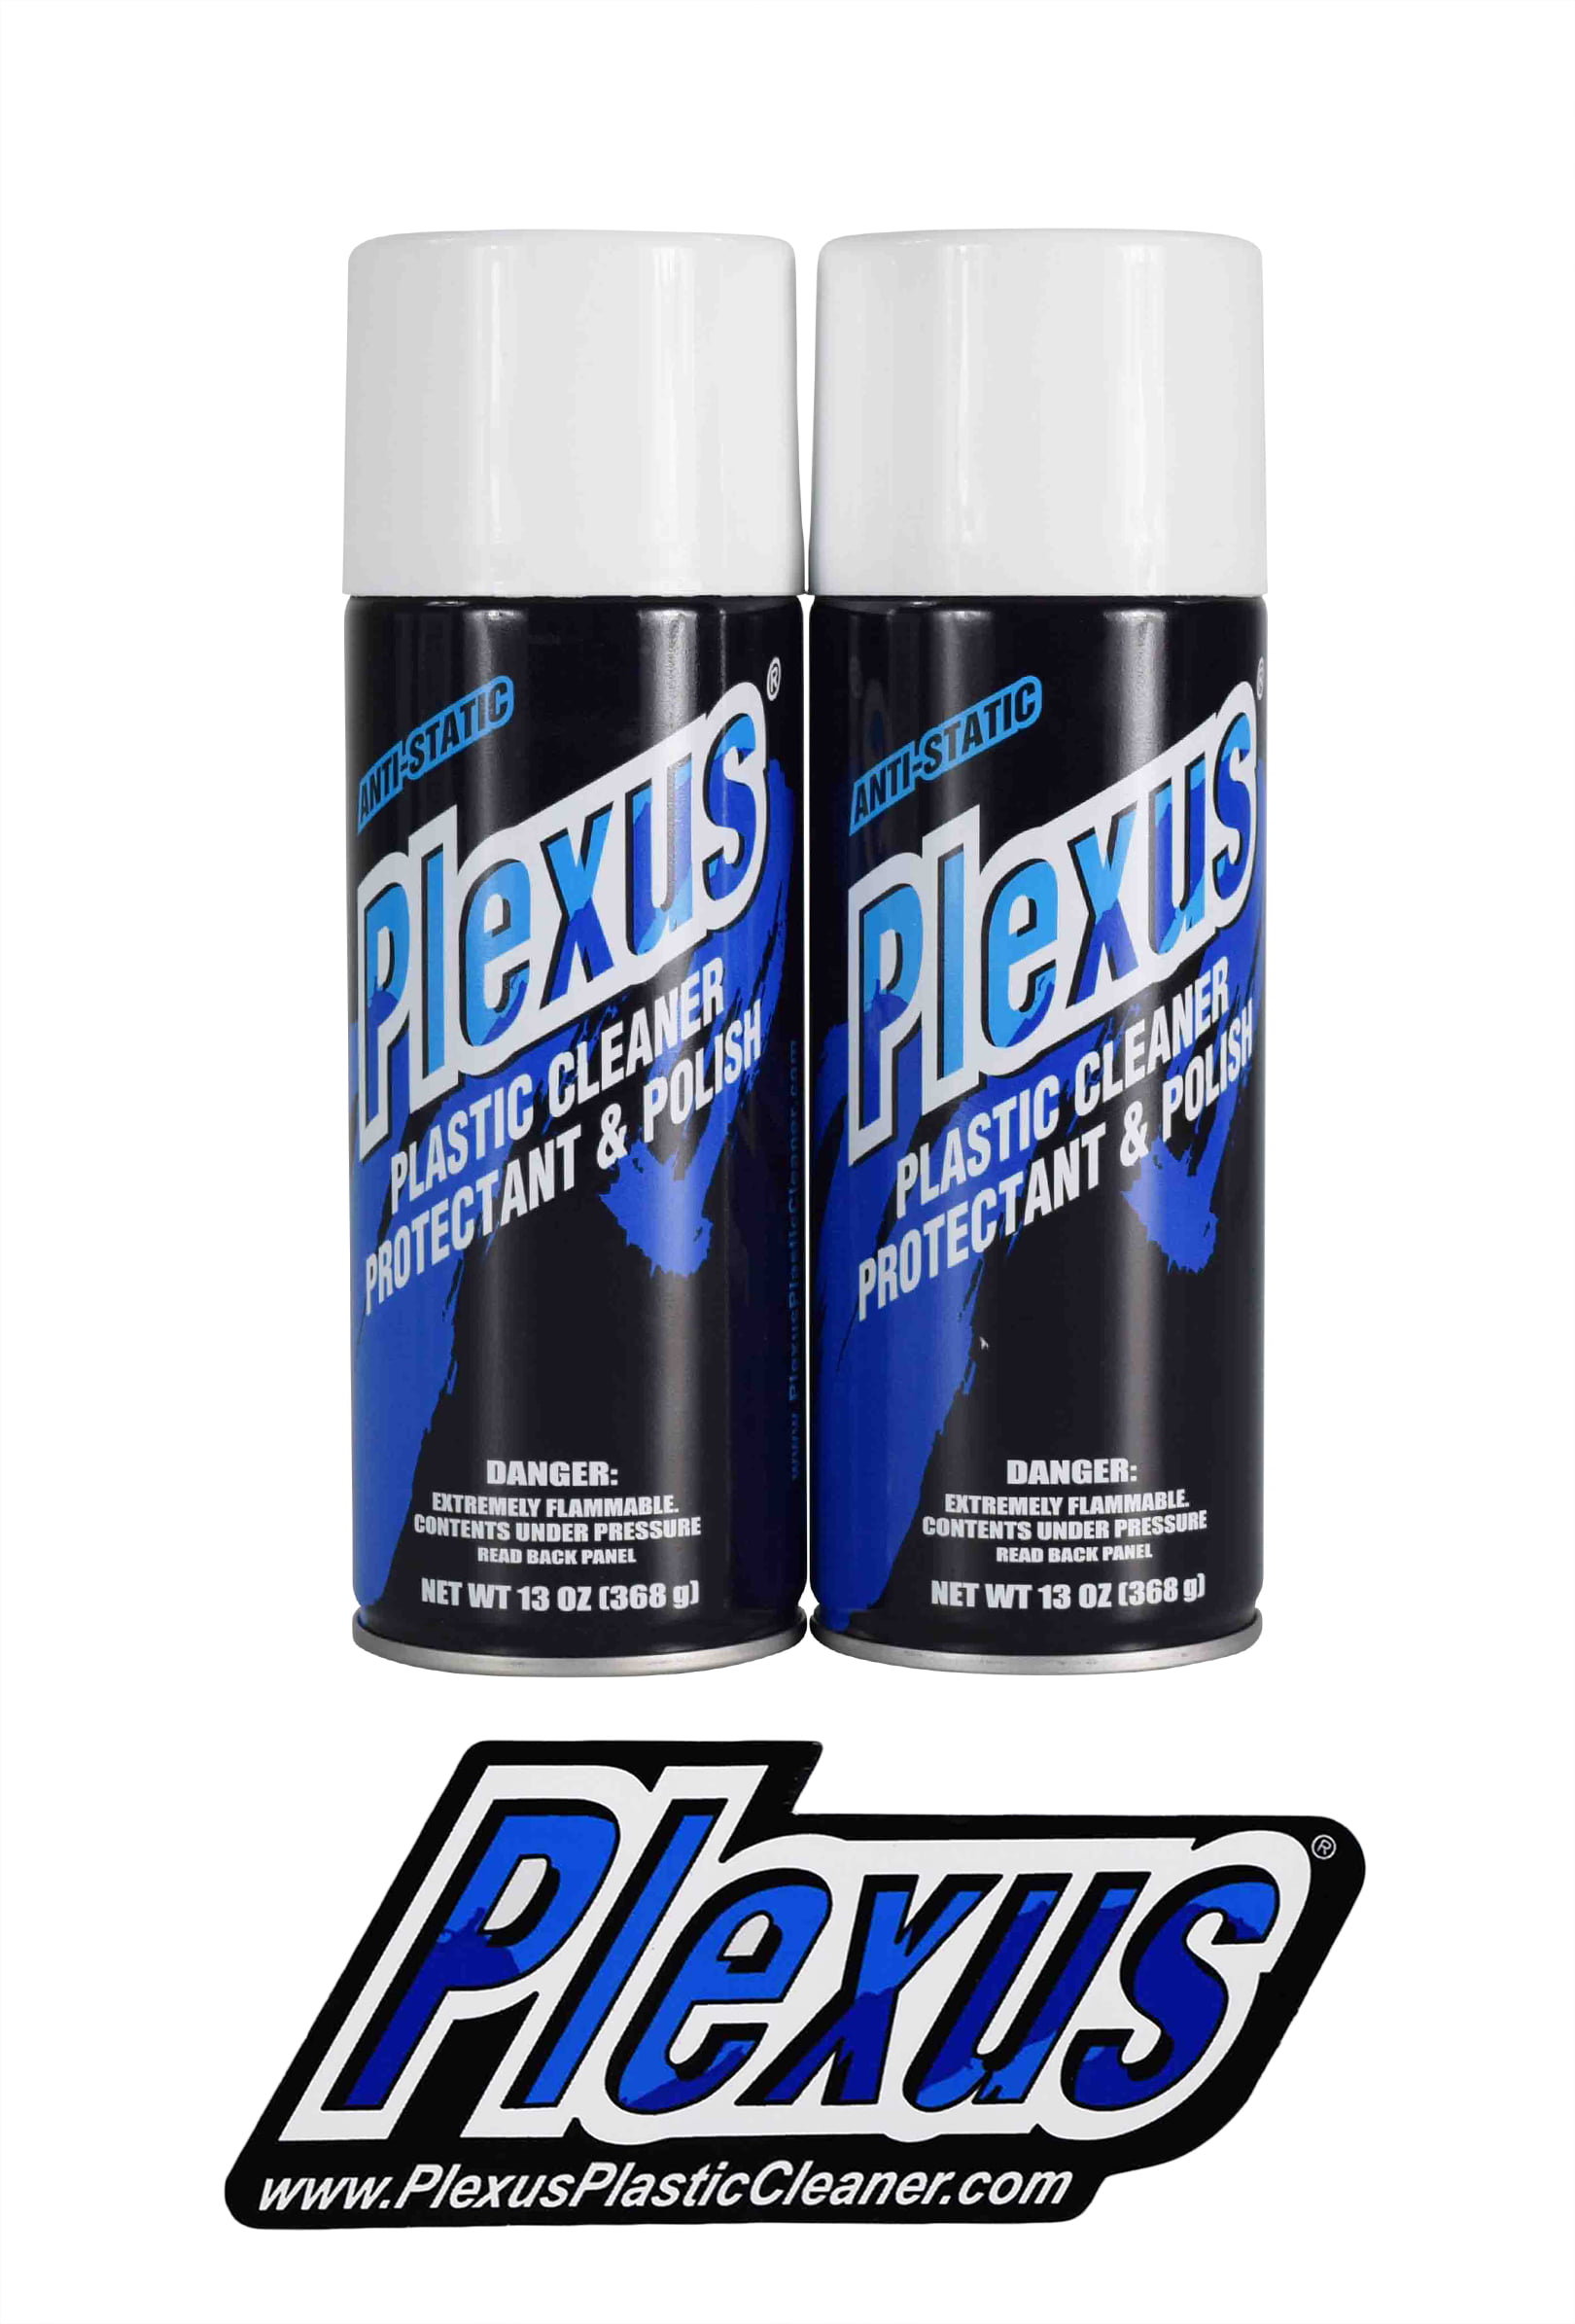 Plexus Plastic Cleaner Protectant and Polish 13oz : BidBud